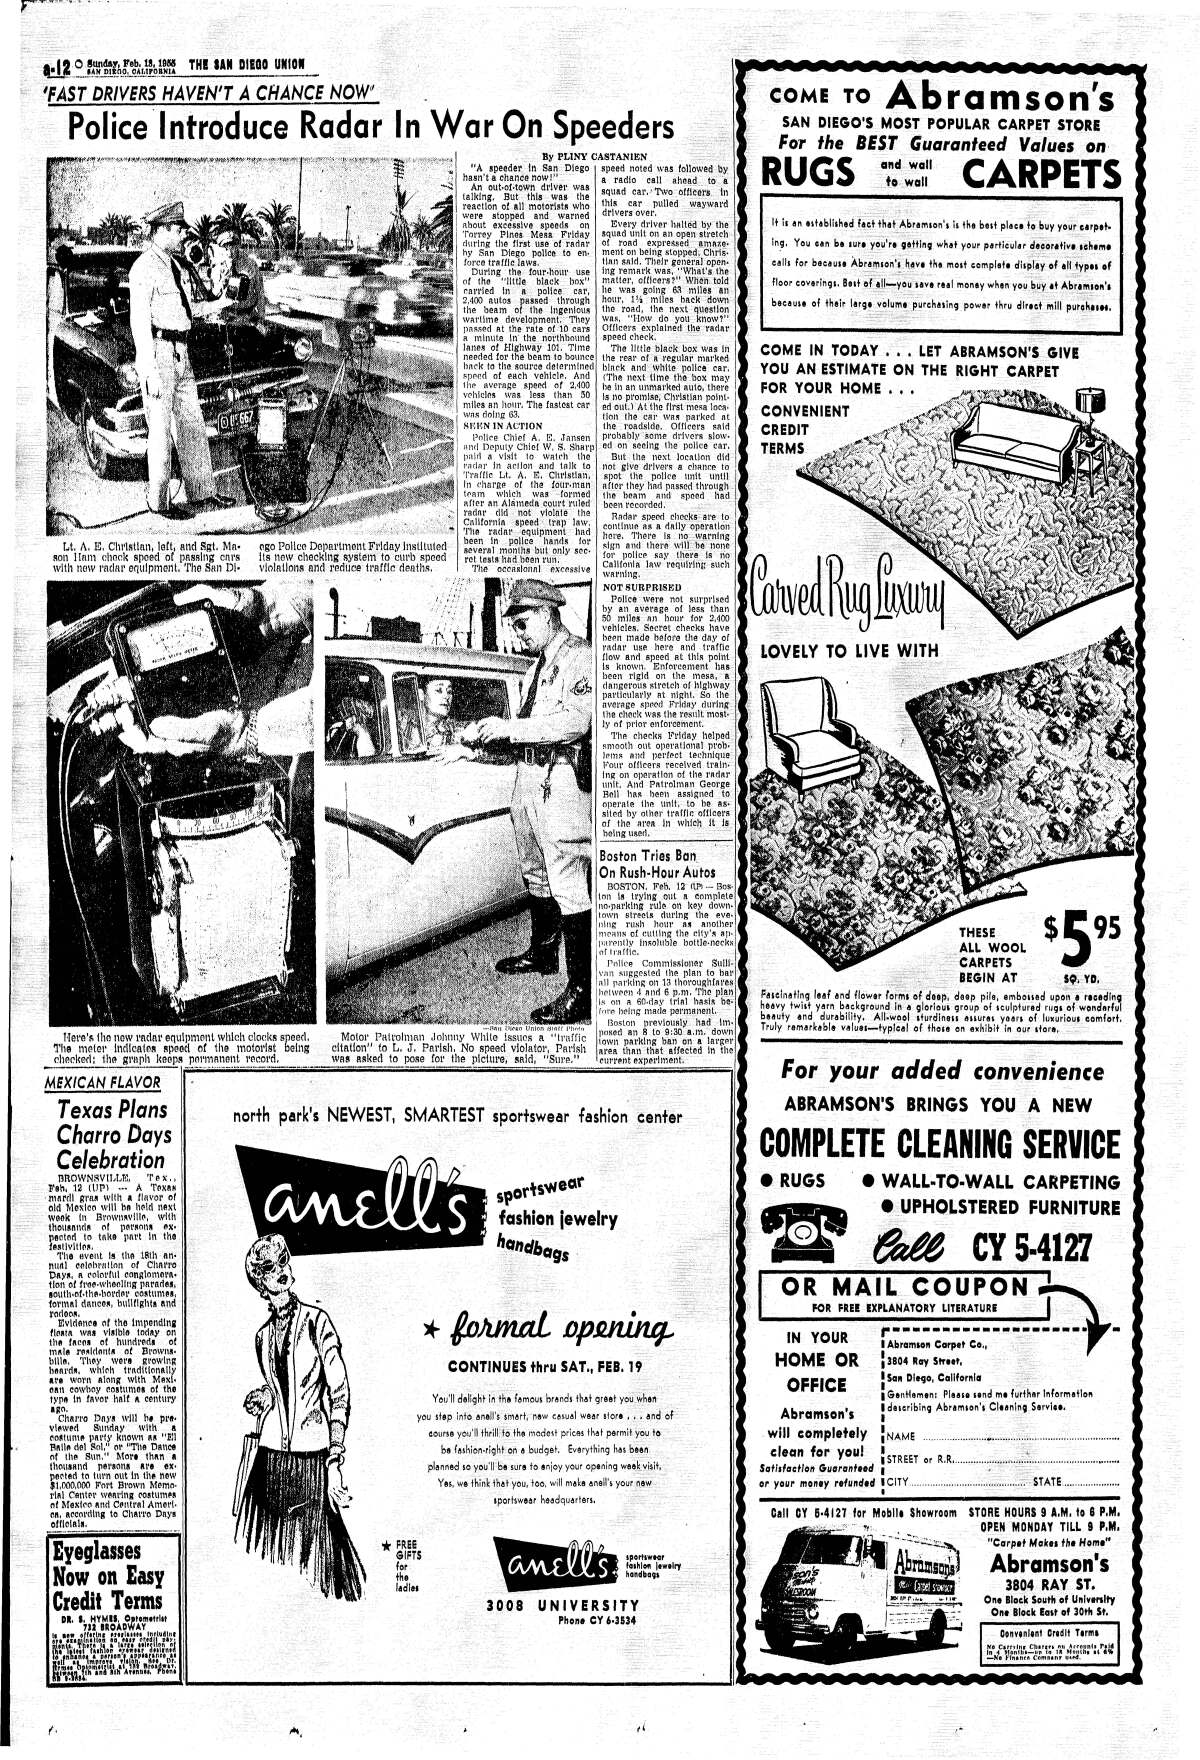 "Police introduce radar in war on speeders," headline and photos from The San Diego Union, Feb. 13, 1955.